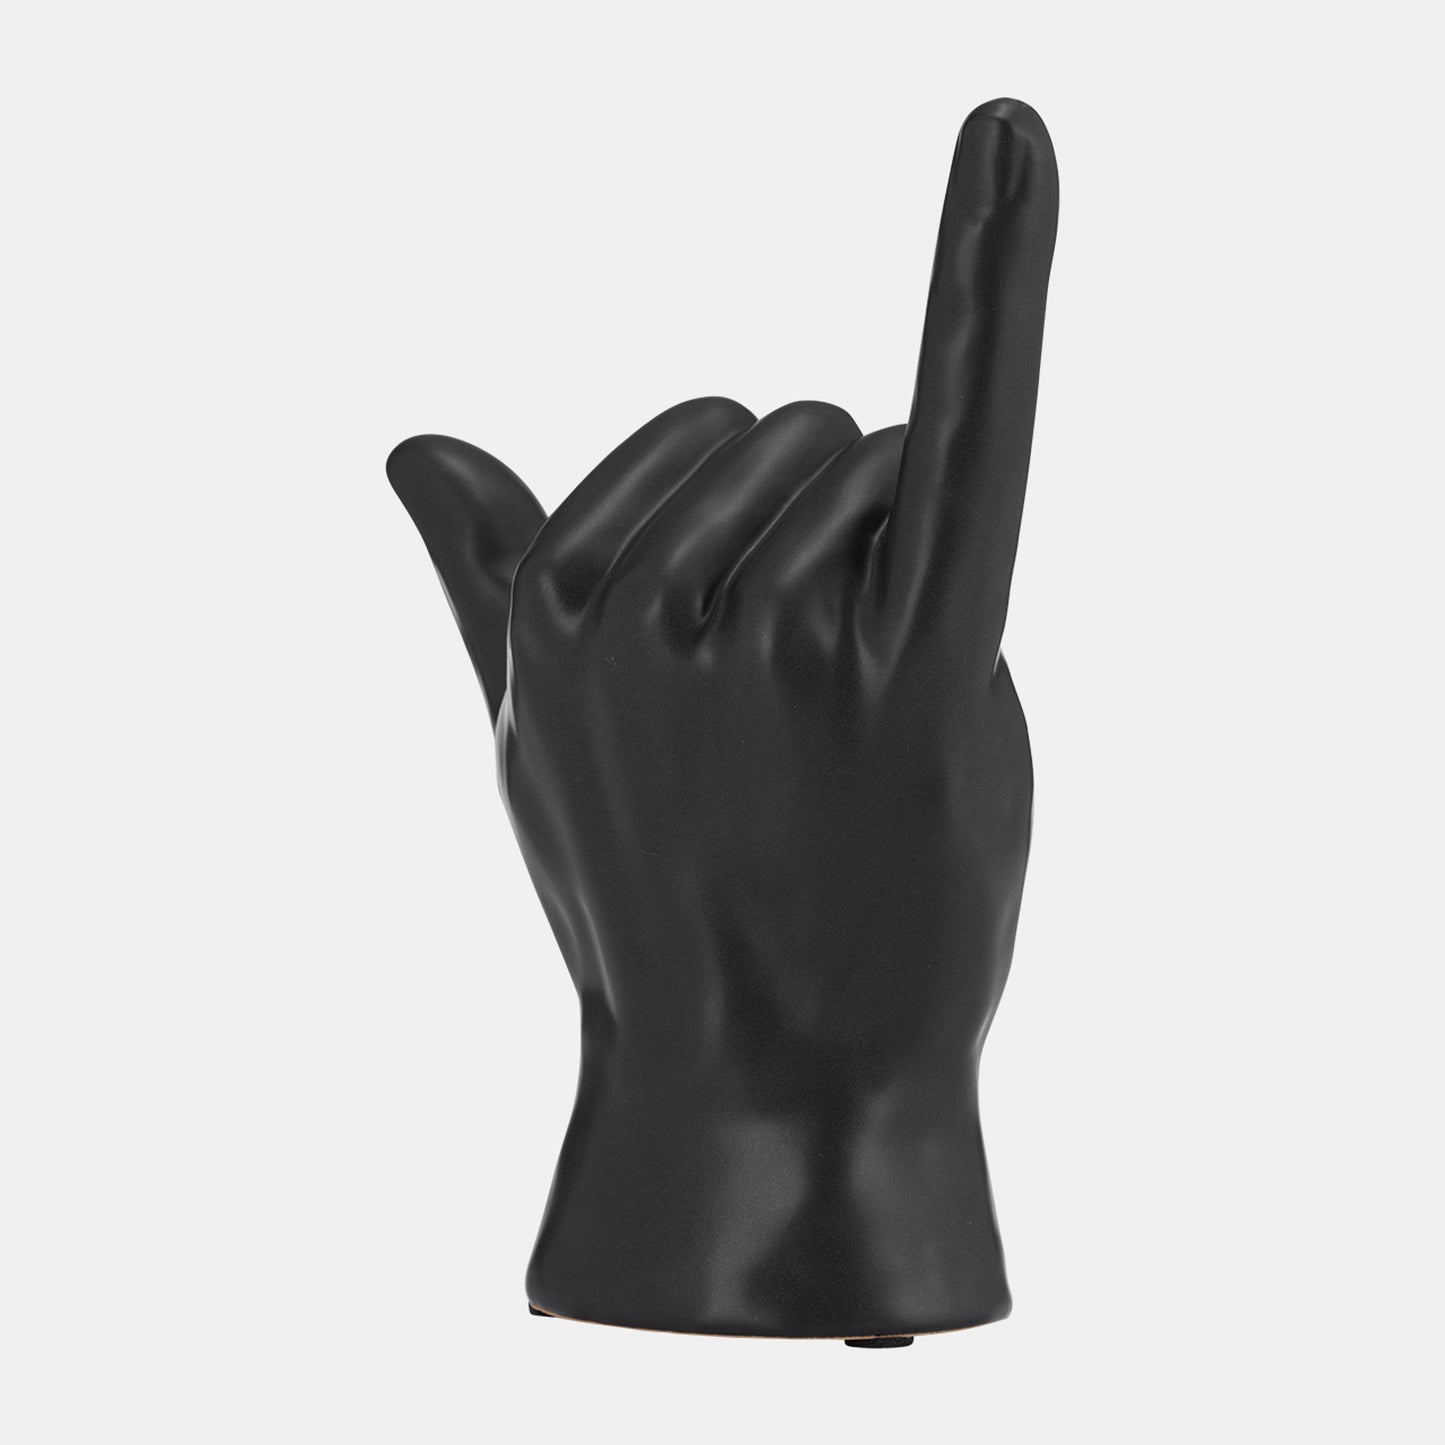 7"h, "Hang Loose" Hand, Black